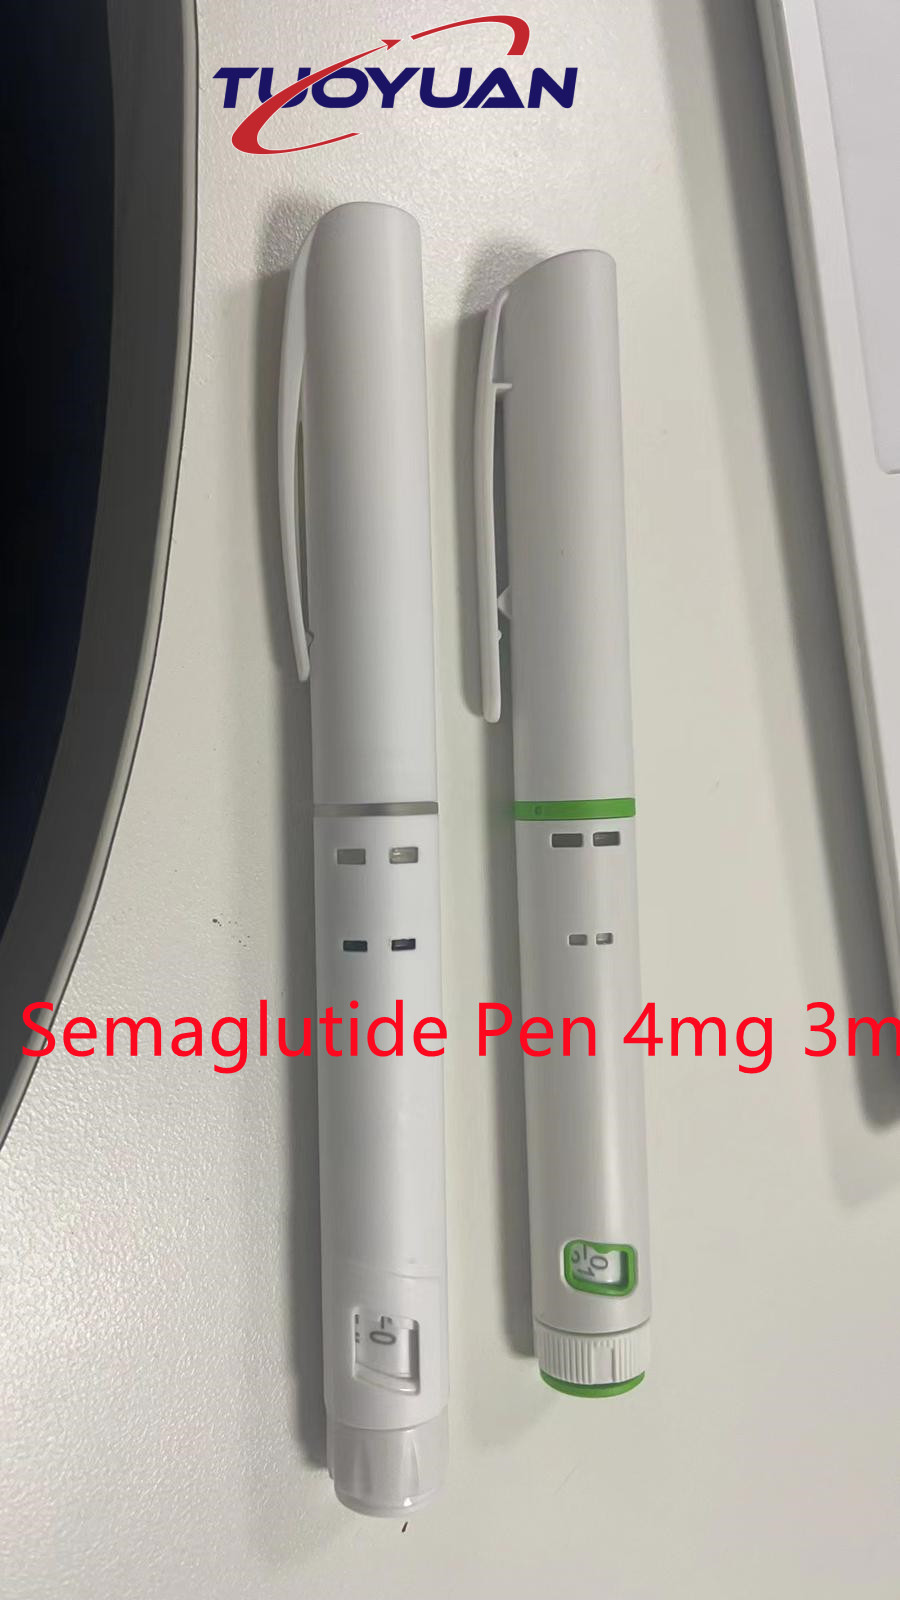 top quality semaglutide pen